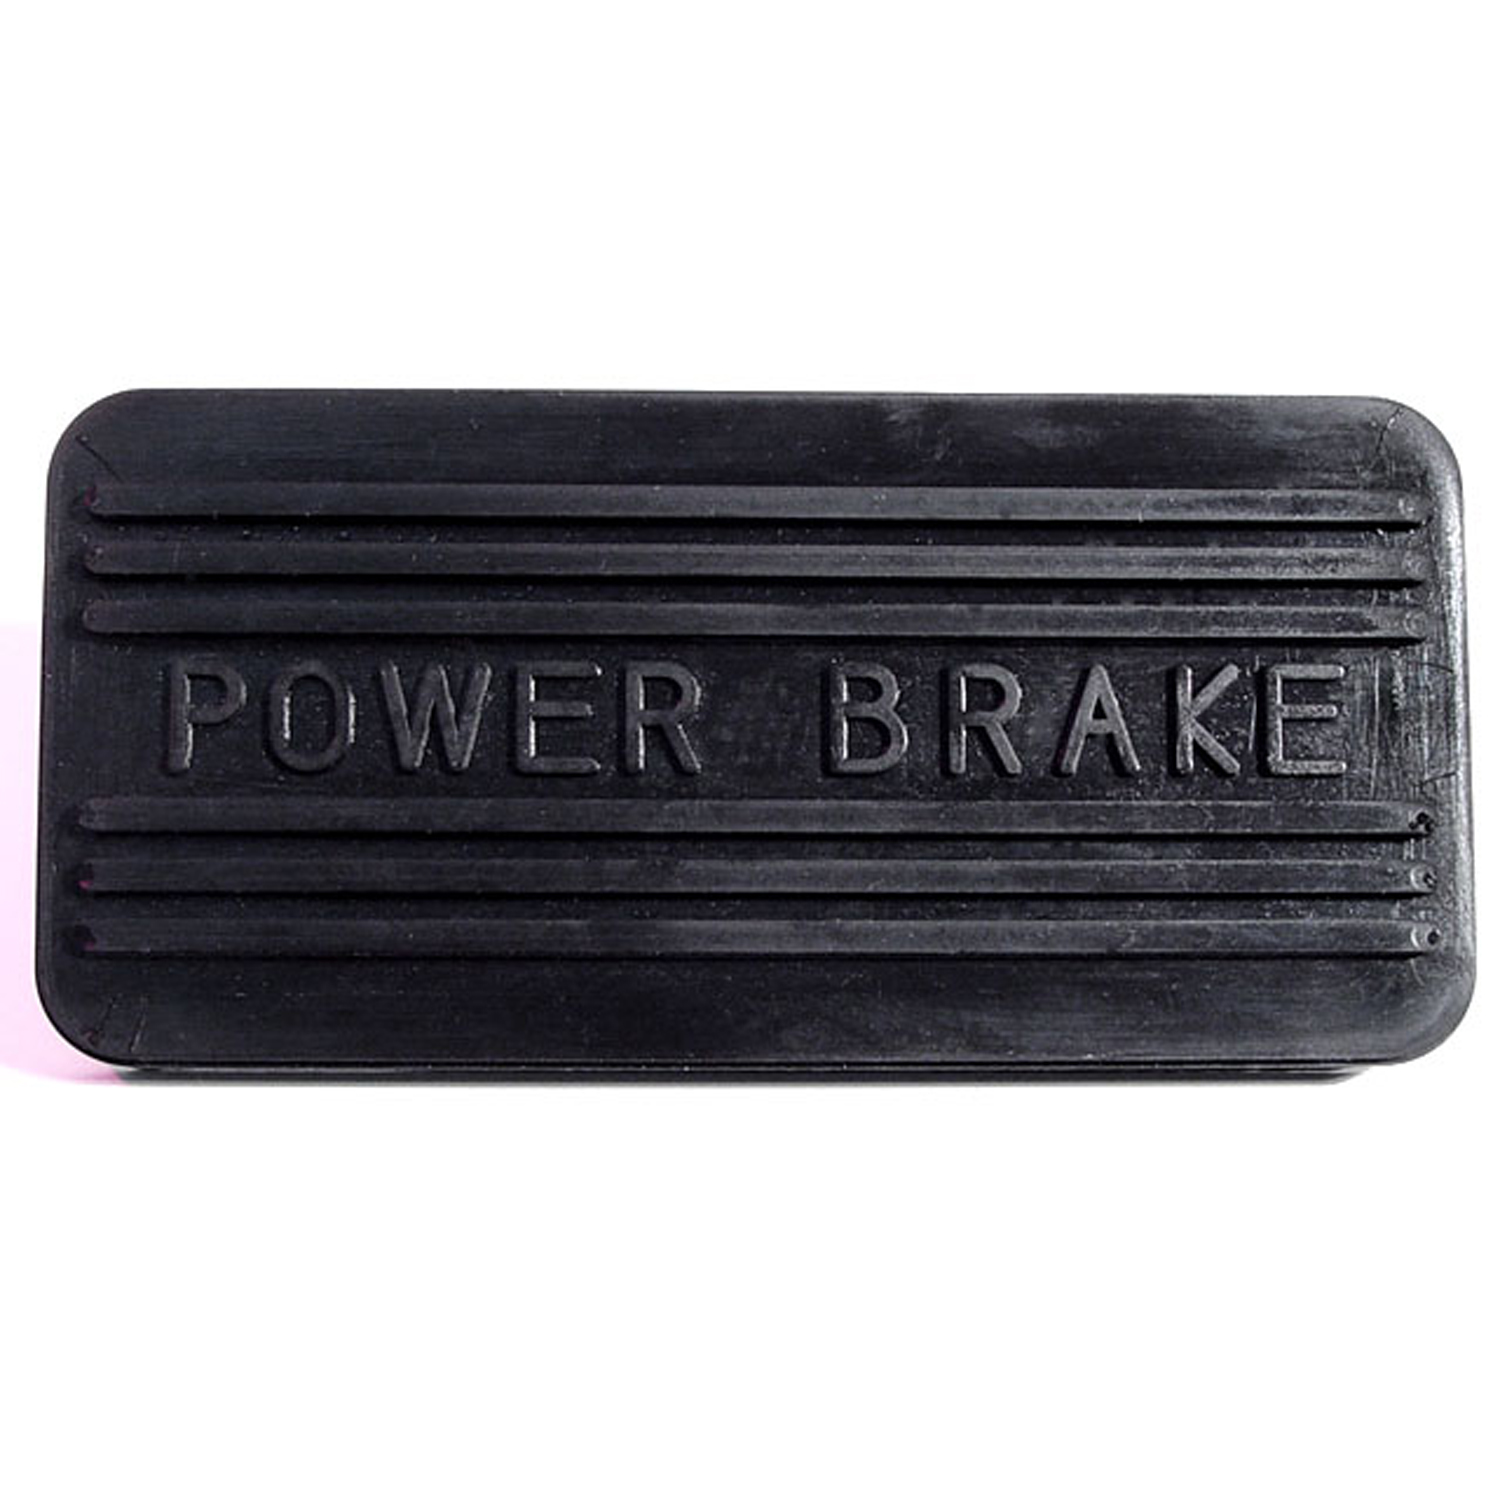 1958 Buick Limited Power Brake Pedal Pad, Black.  Lettered Power Brake-CB 83-C